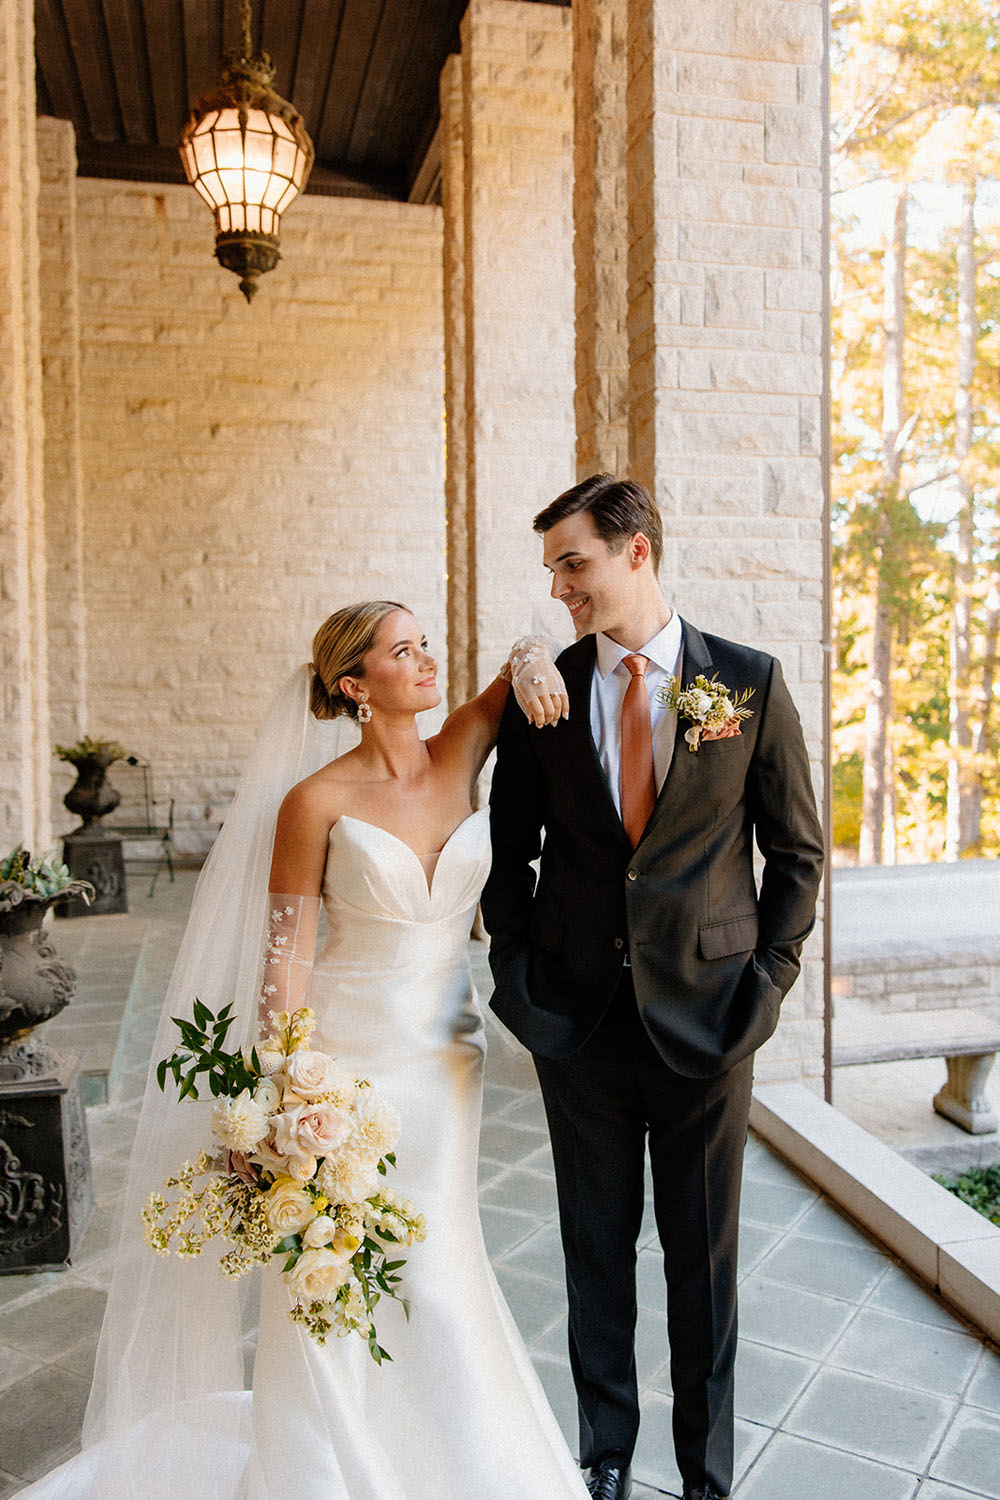 A warm, elevated fall garden wedding in Arkansas